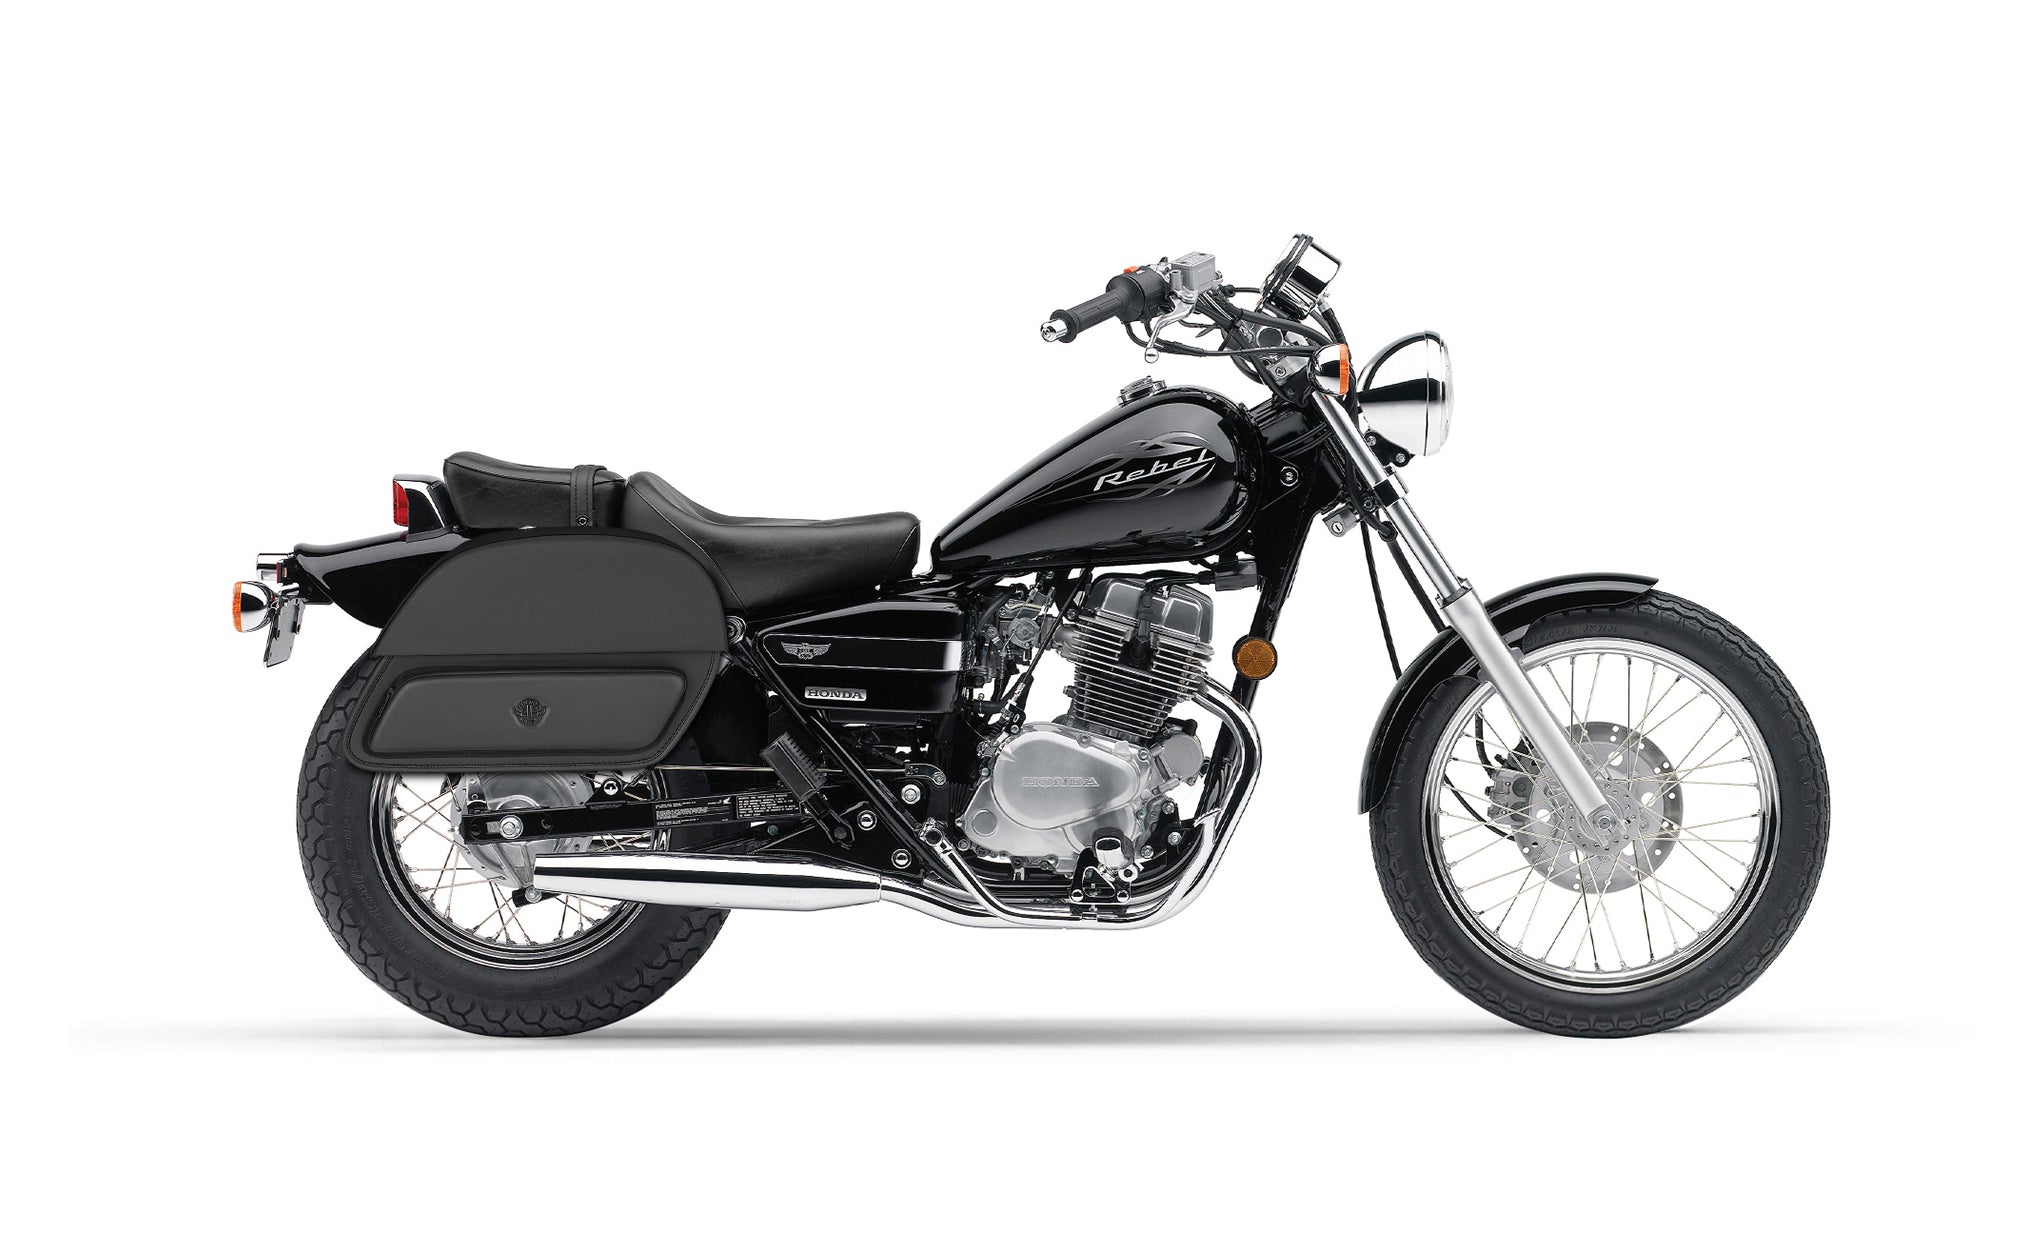 Viking Pantheon Medium Honda Rebel 250 Cmx250C Leather Motorcycle Saddlebags on Bike Photo @expand